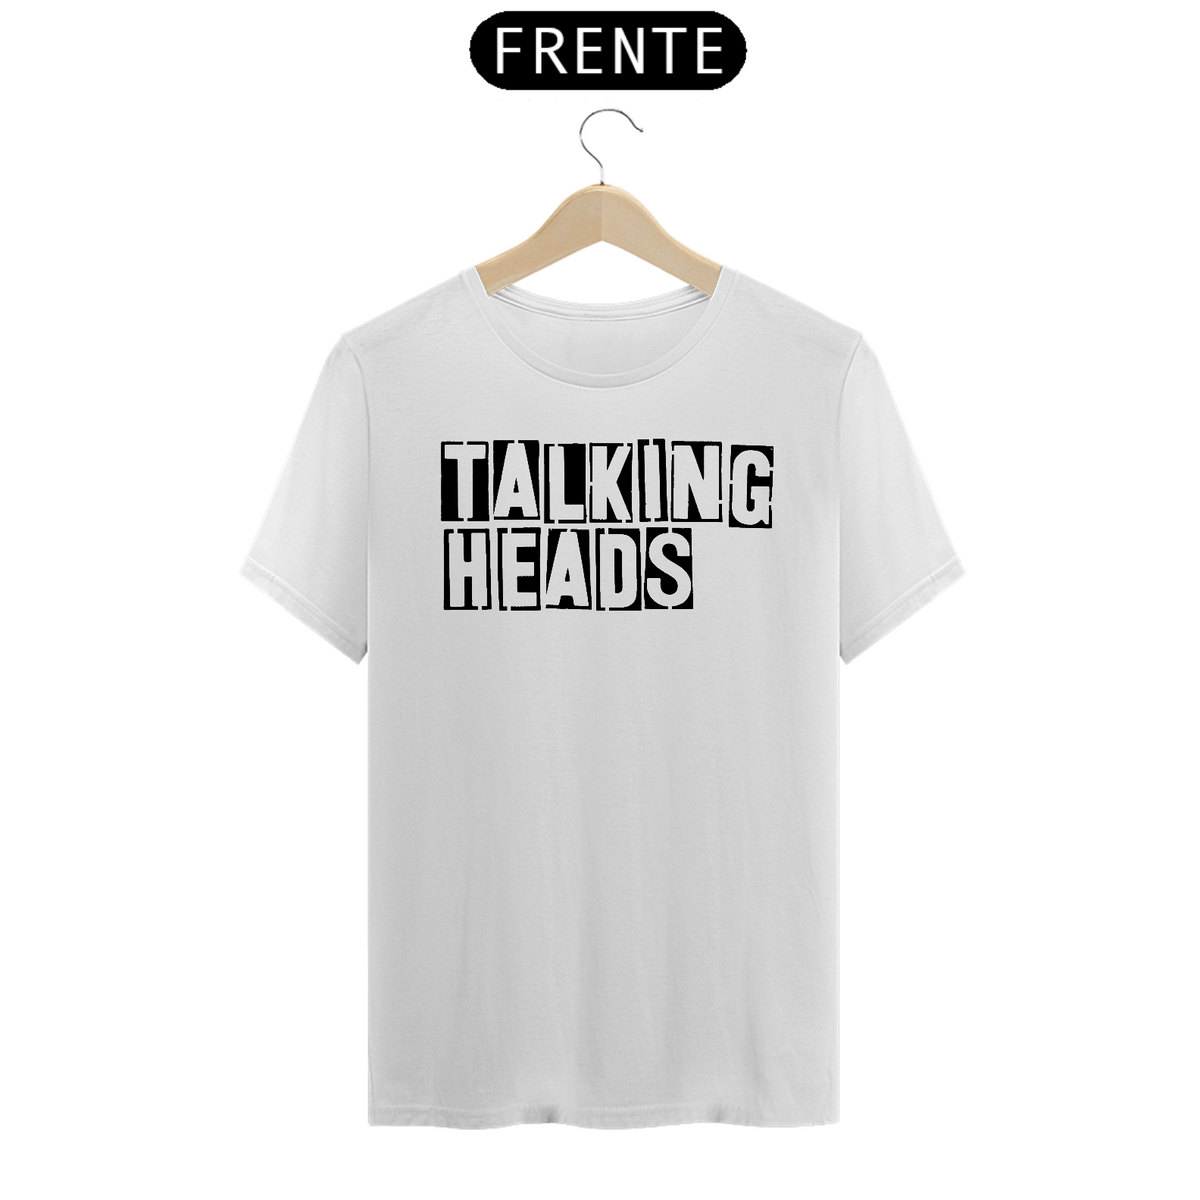 Nome do produto: Talking Heads